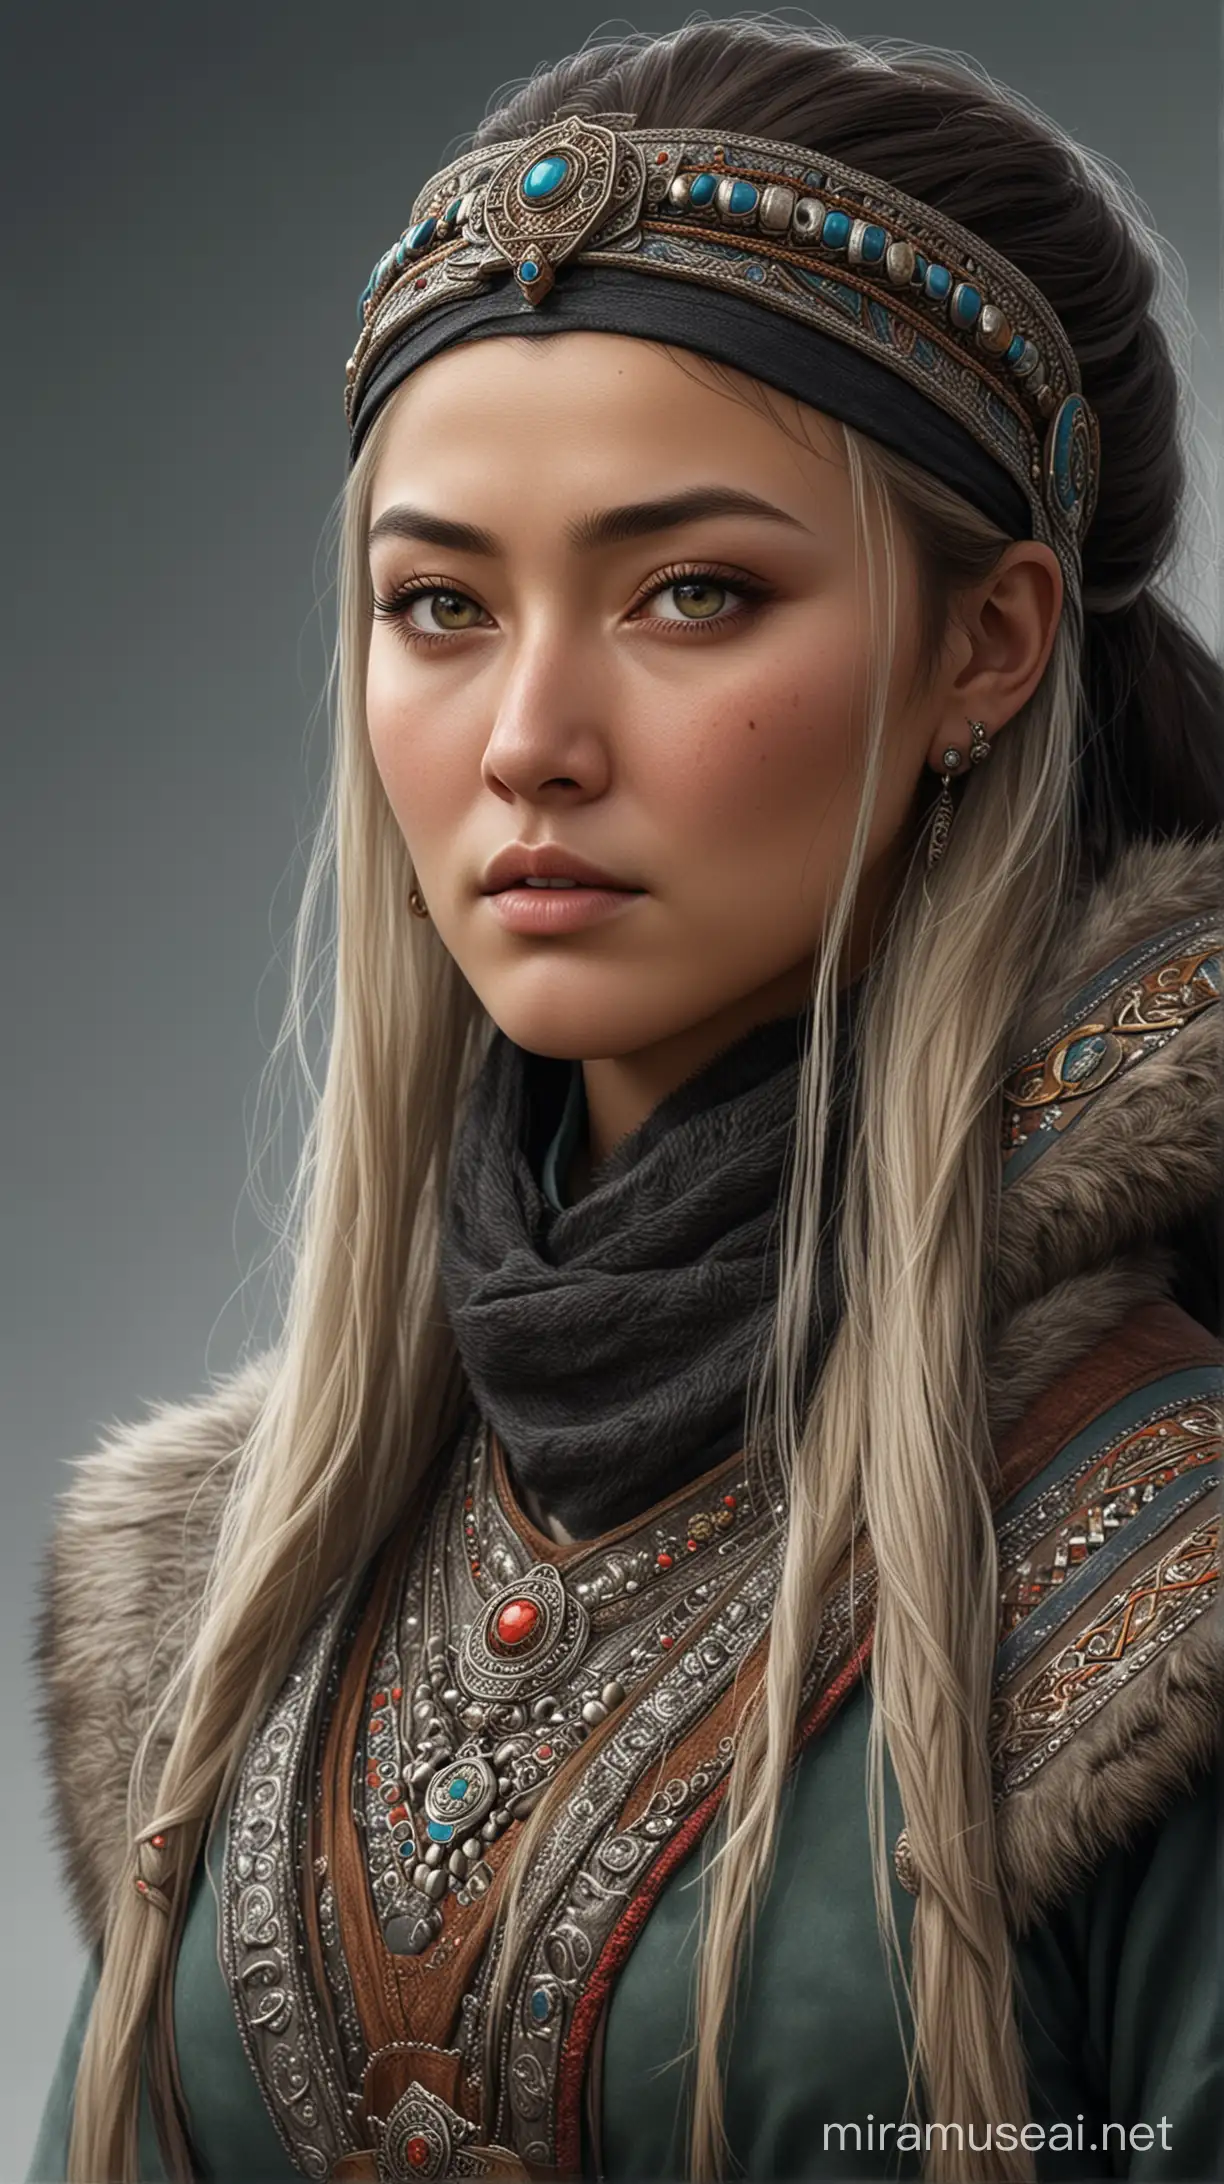 Kutlun Granddaughter of Genghis Khan Master of HighStakes Challenges